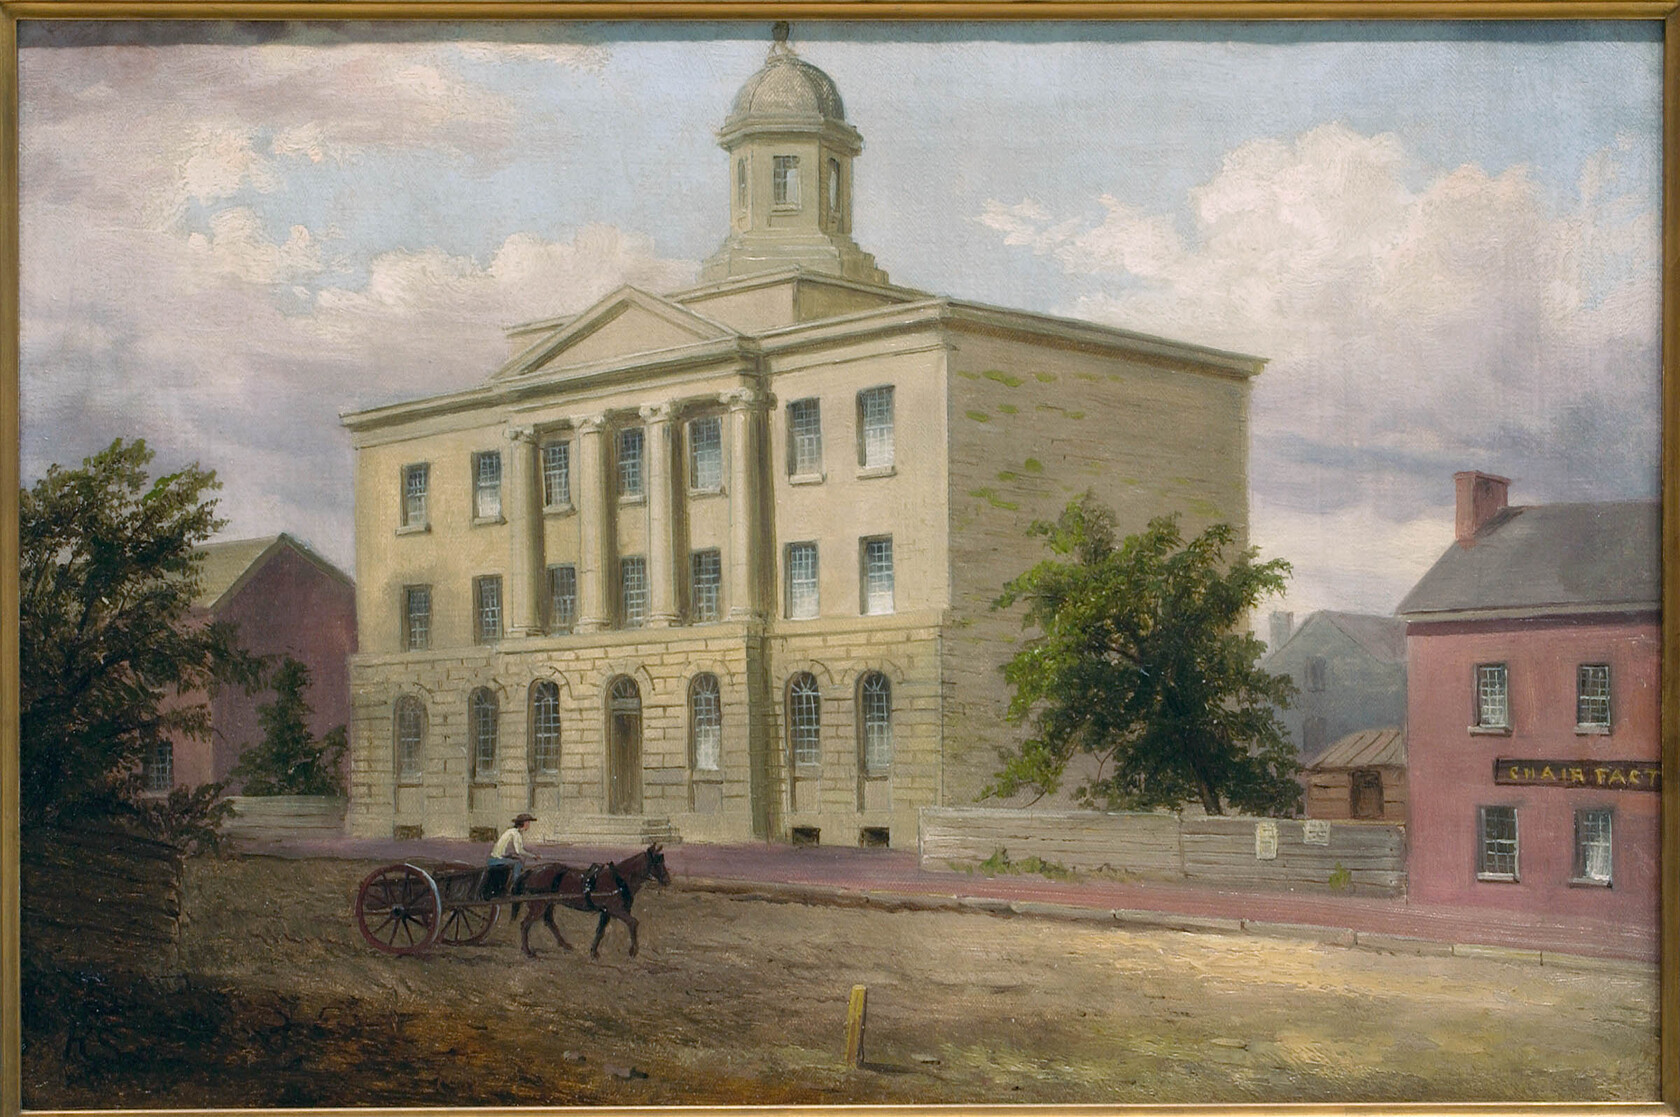 Western_University_of_Pennsylvania%2C_1833.jpg